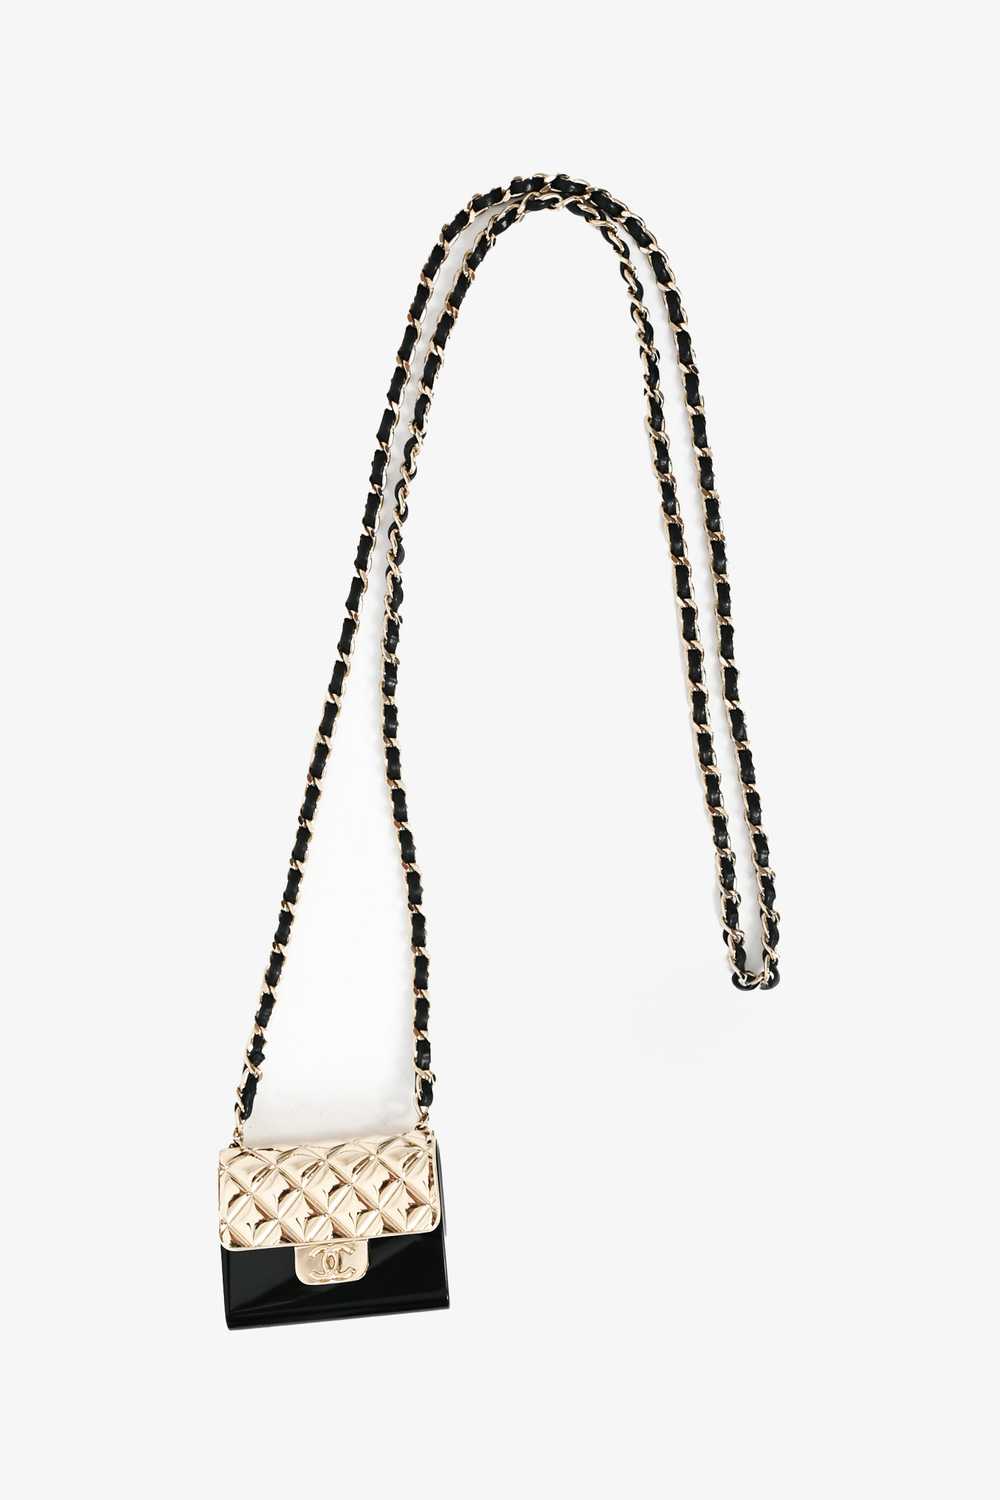 Pre-loved Chanel™ Black/Gold Mini Purse Necklace - image 7